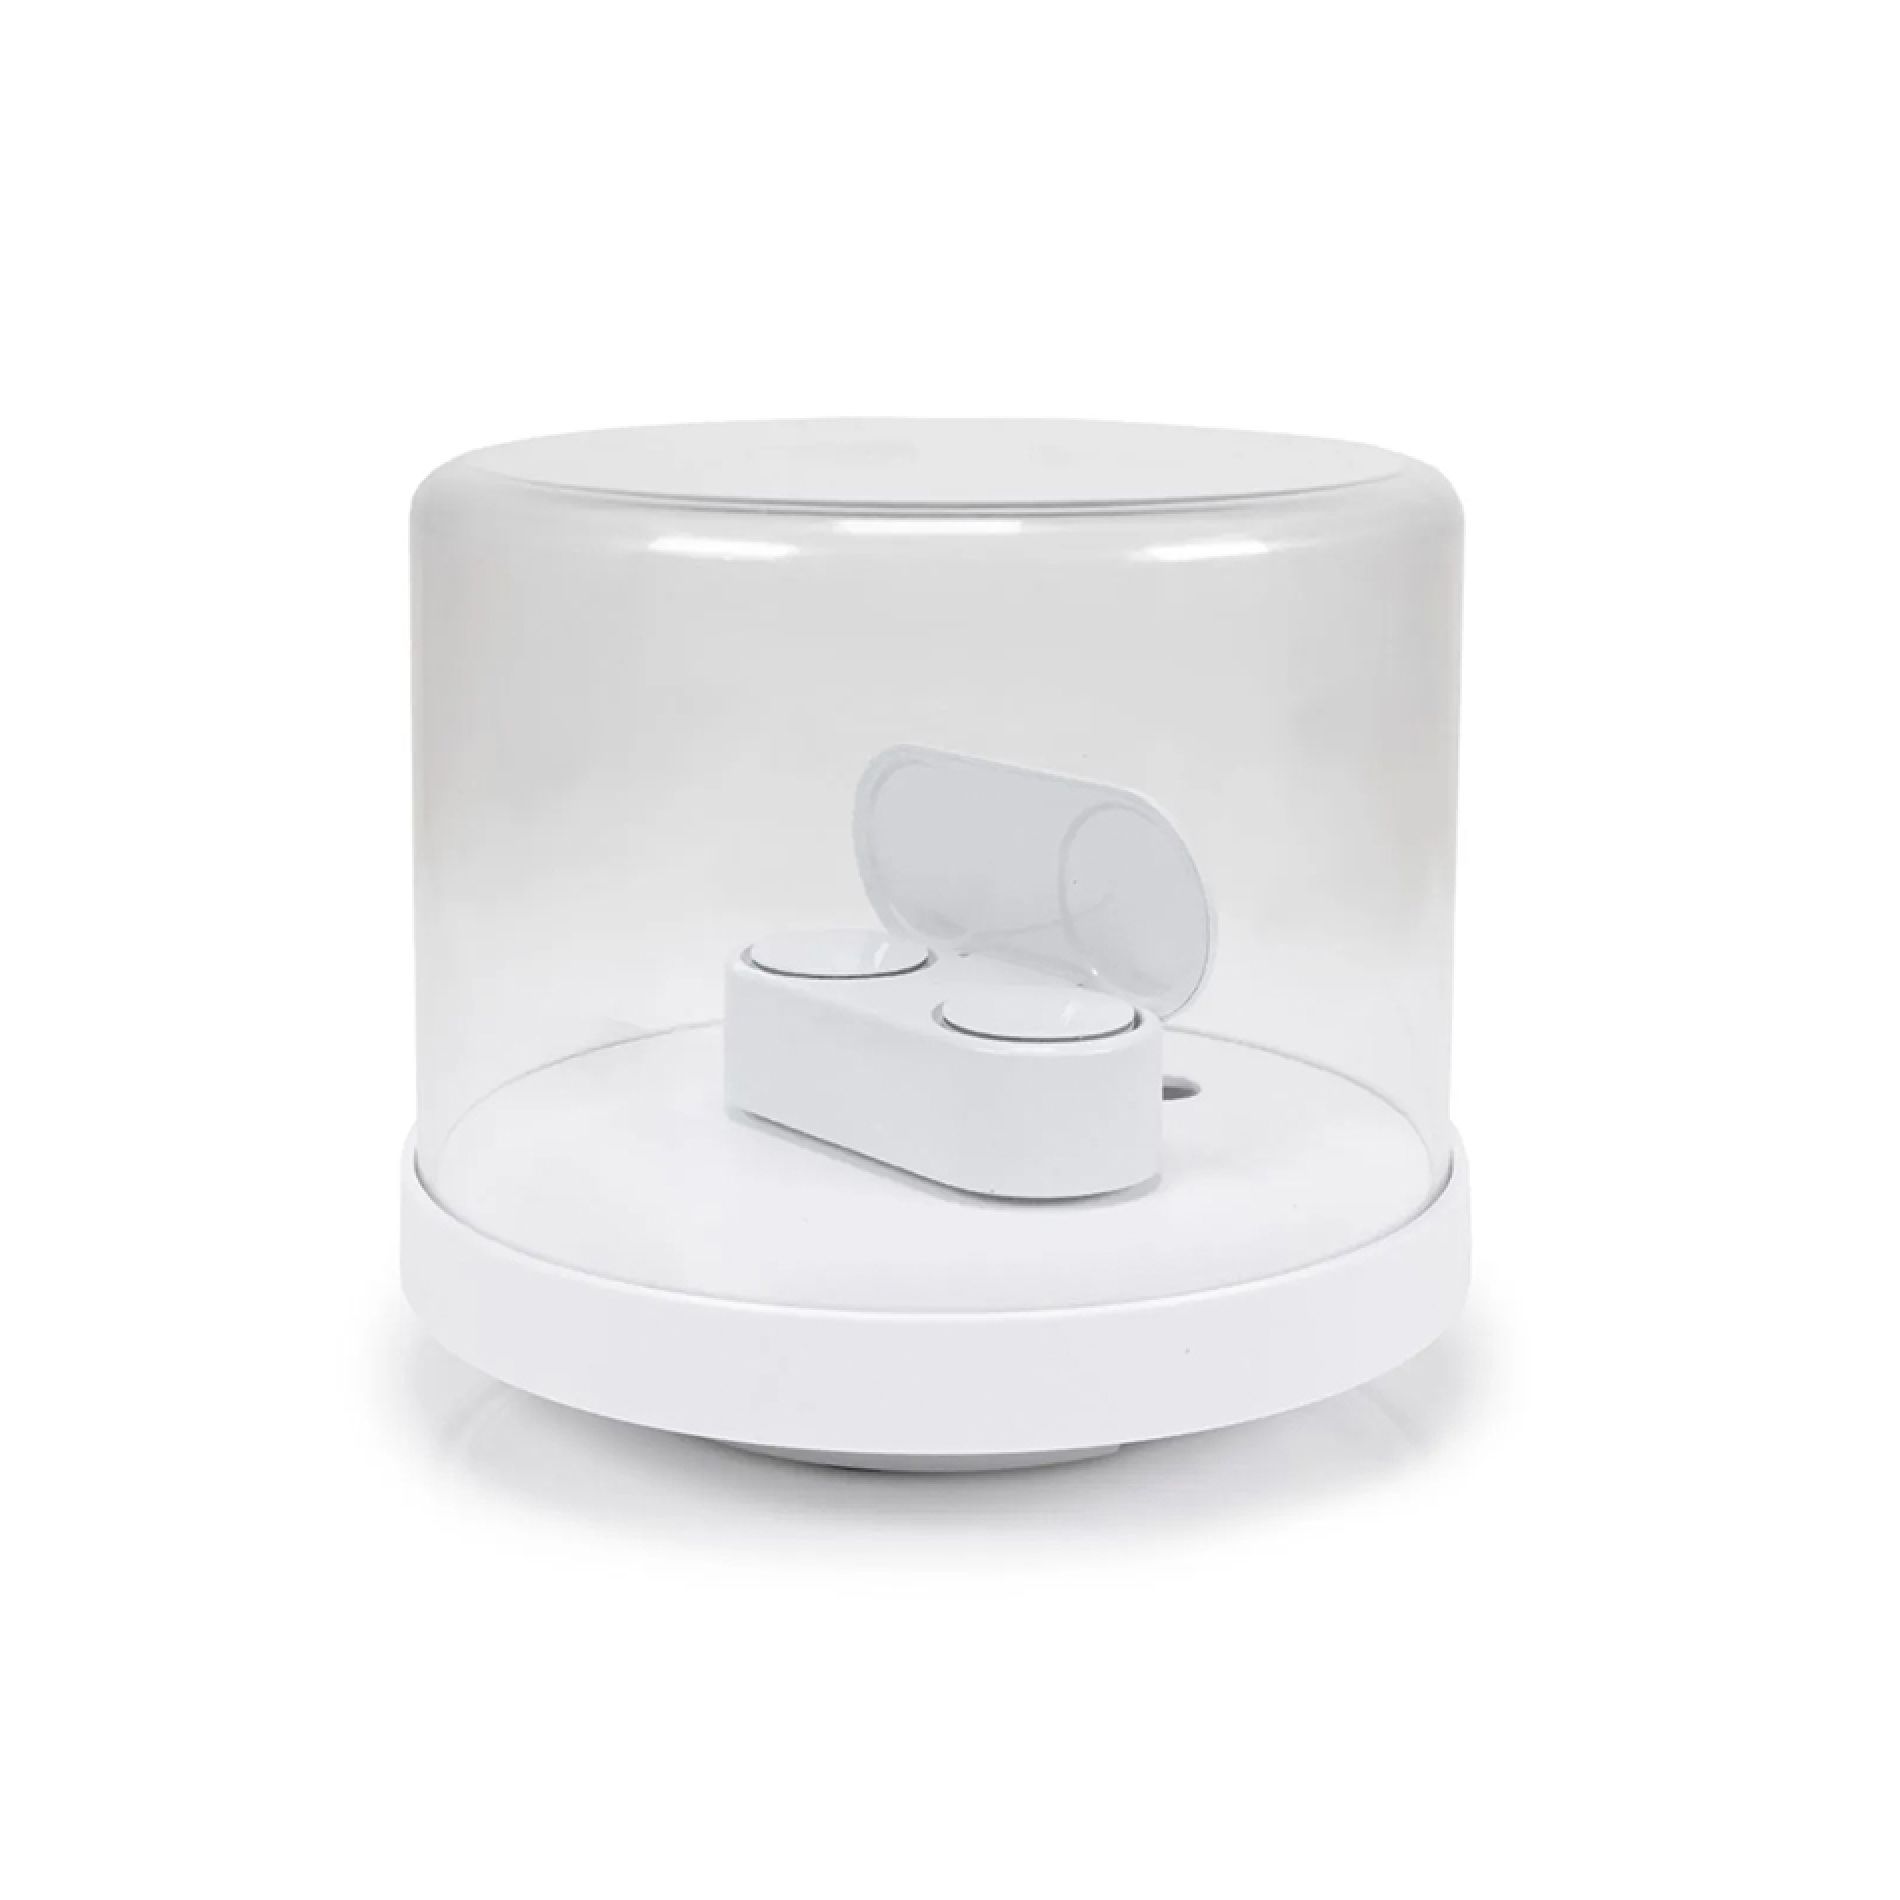 OnePOD Wireless Gallery Image